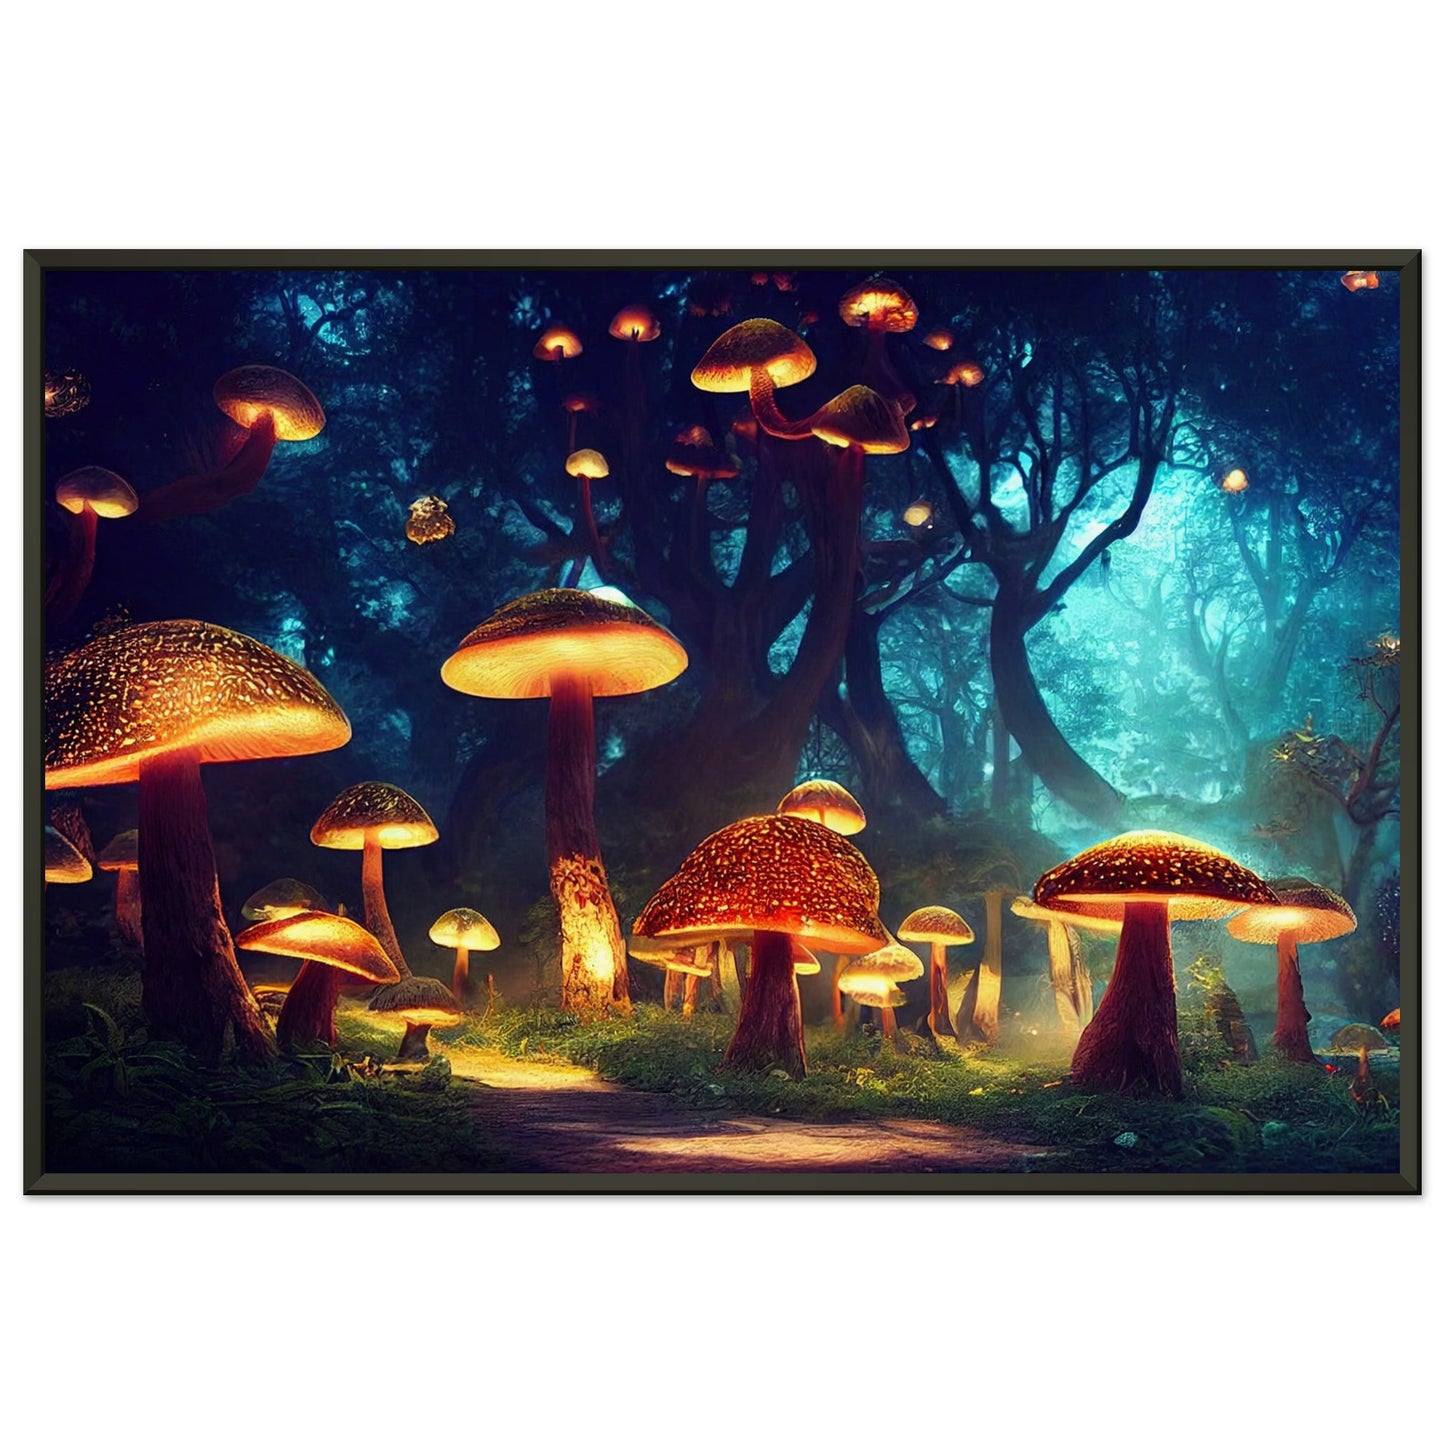 Bioluminescence mushrooms in forest at night